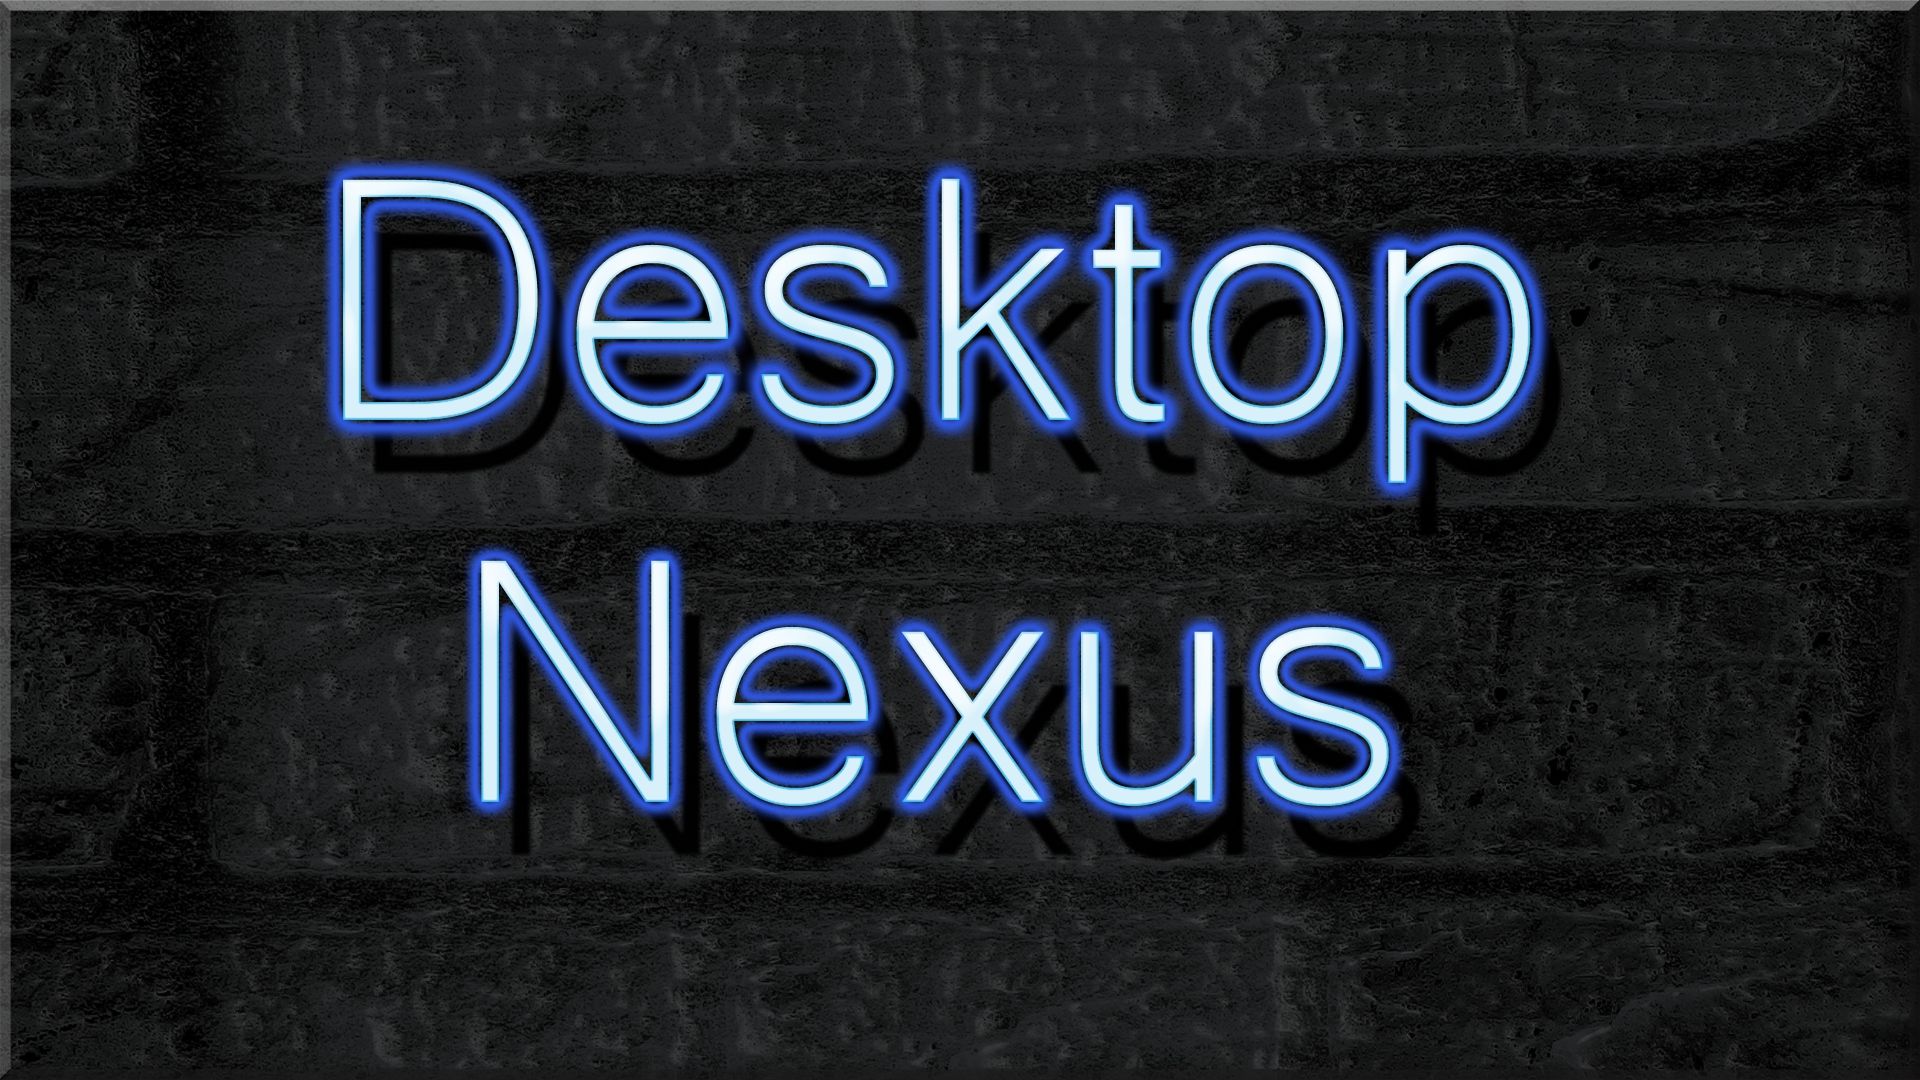 14558 Desktop Nexus Desktop Pics Wallpaper - WalOps.com